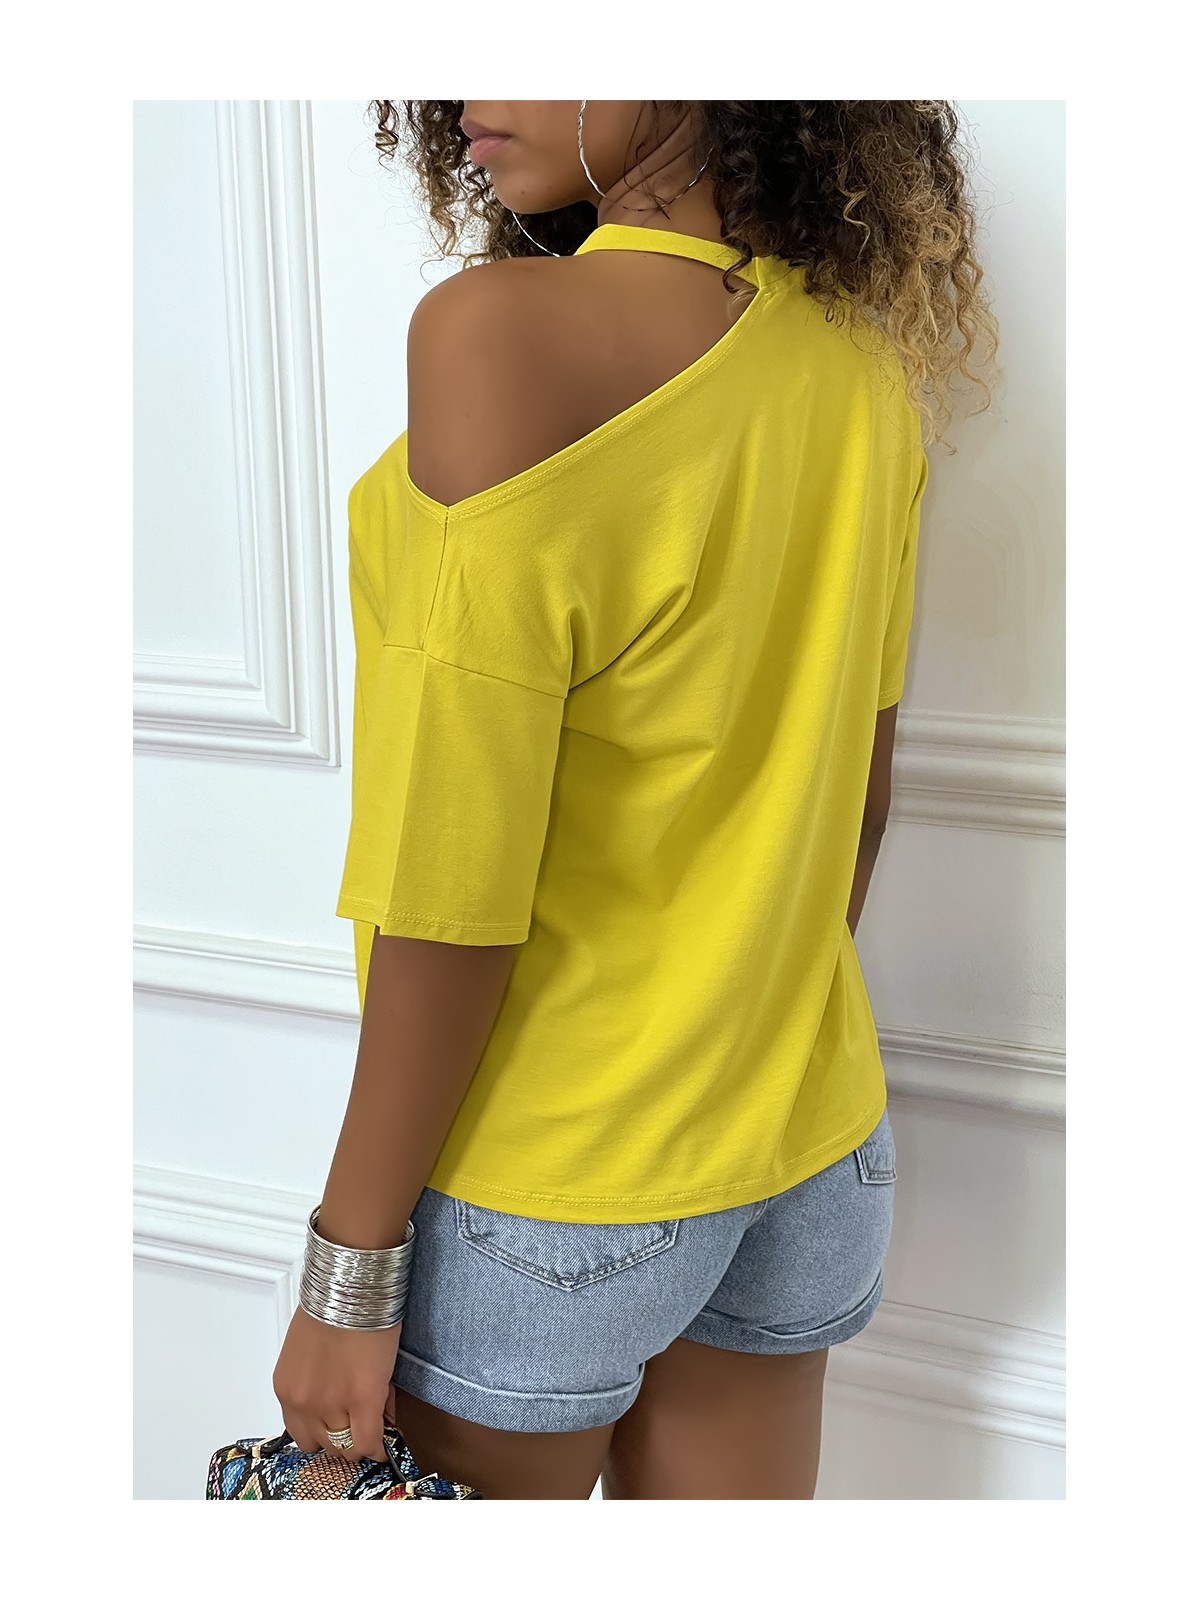 Tee-shirt jaune avec epaule denudé - 4